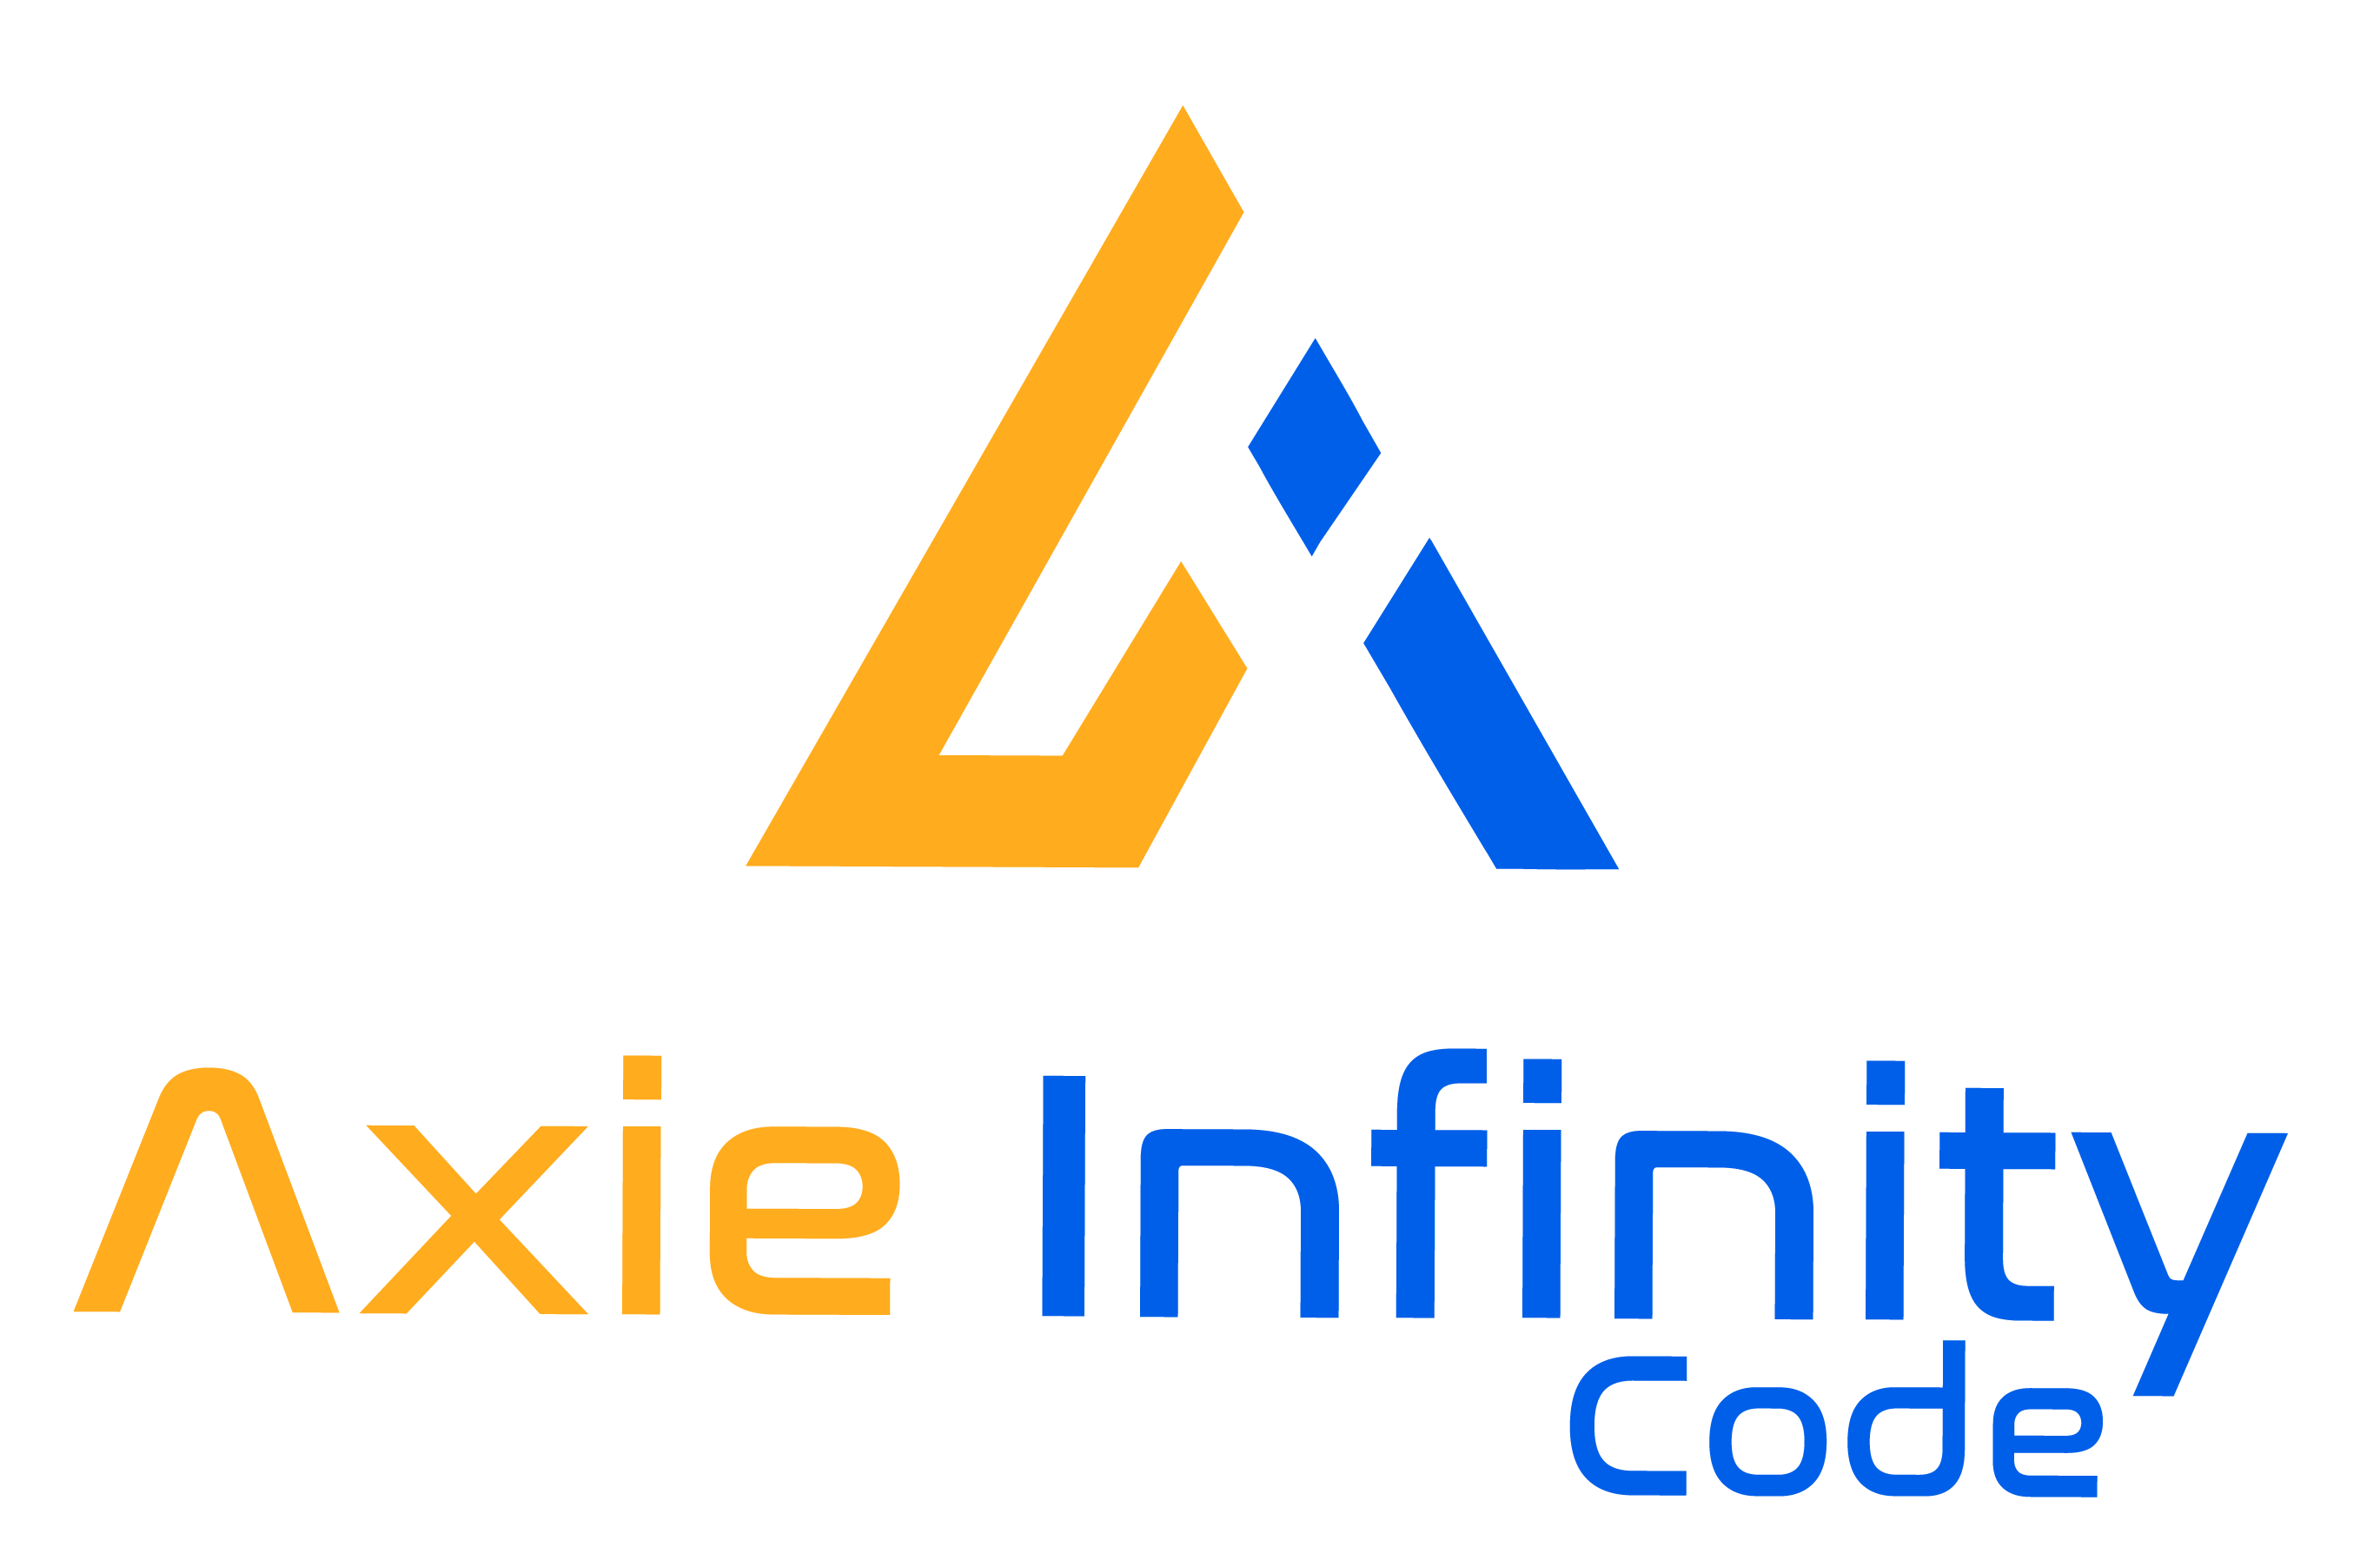 Axie Infinity Code - ÖPPNA ETT GRATIS HANDELSKONTO MED Axie Infinity Code